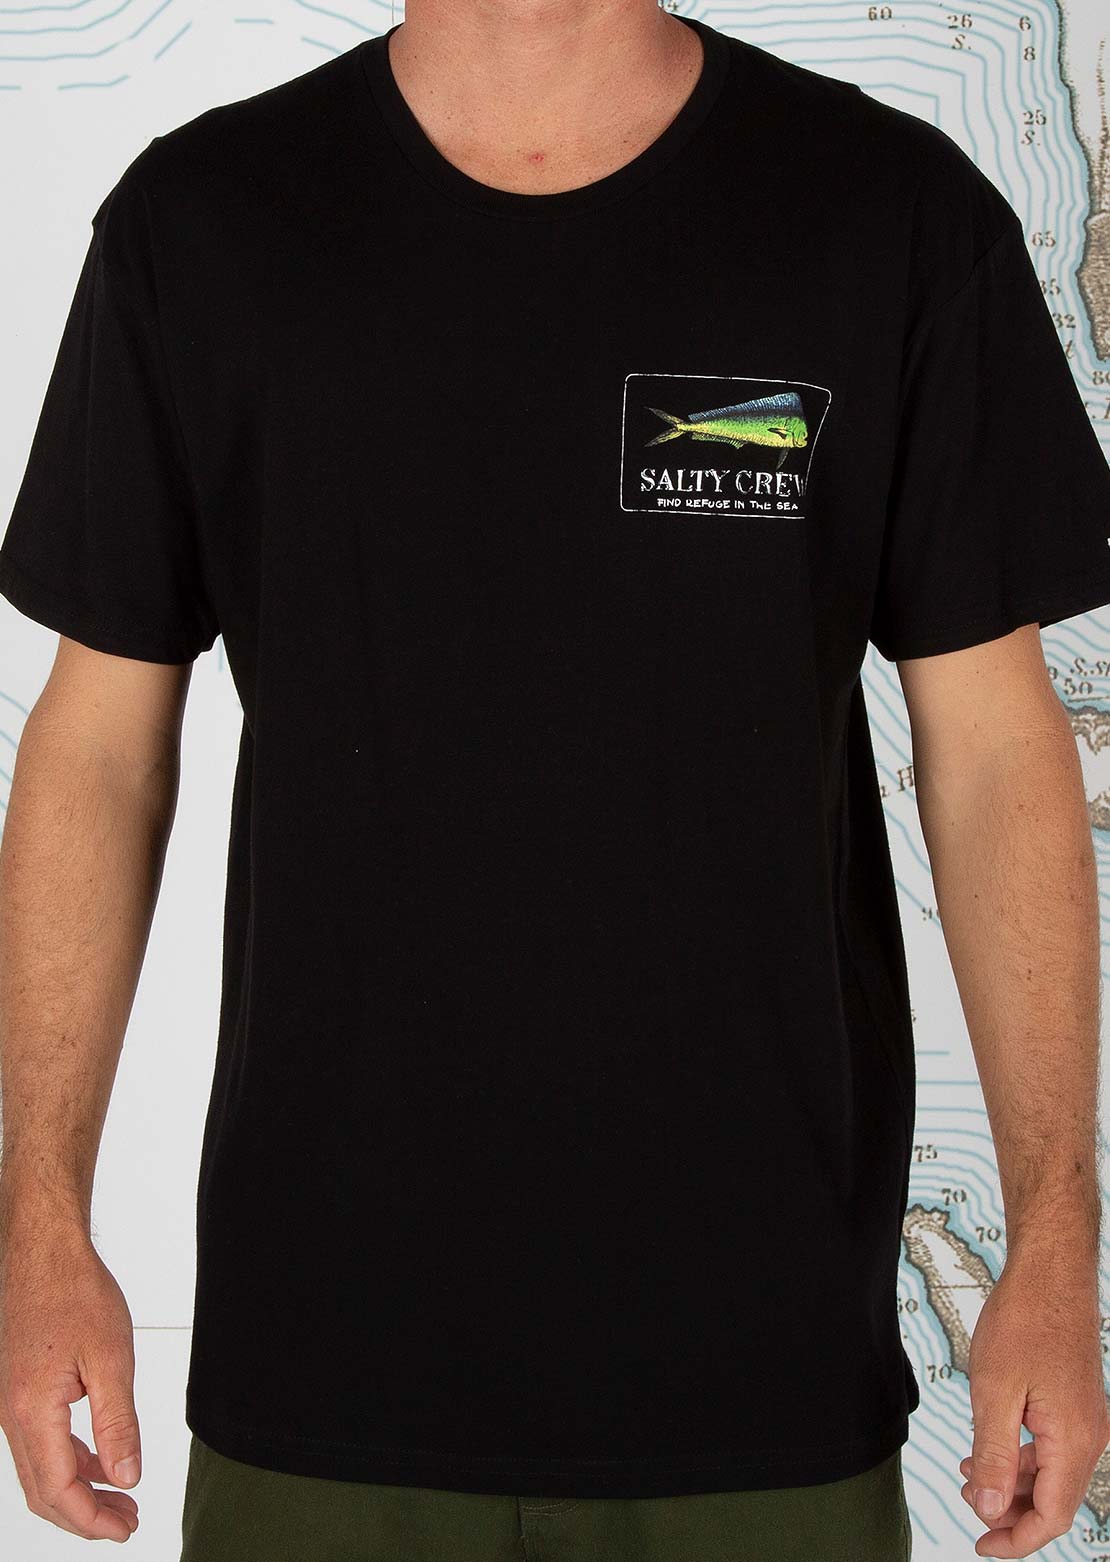 Salty Crew Interclub Premium Short-Sleeve T-Shirt - Men's Black, M